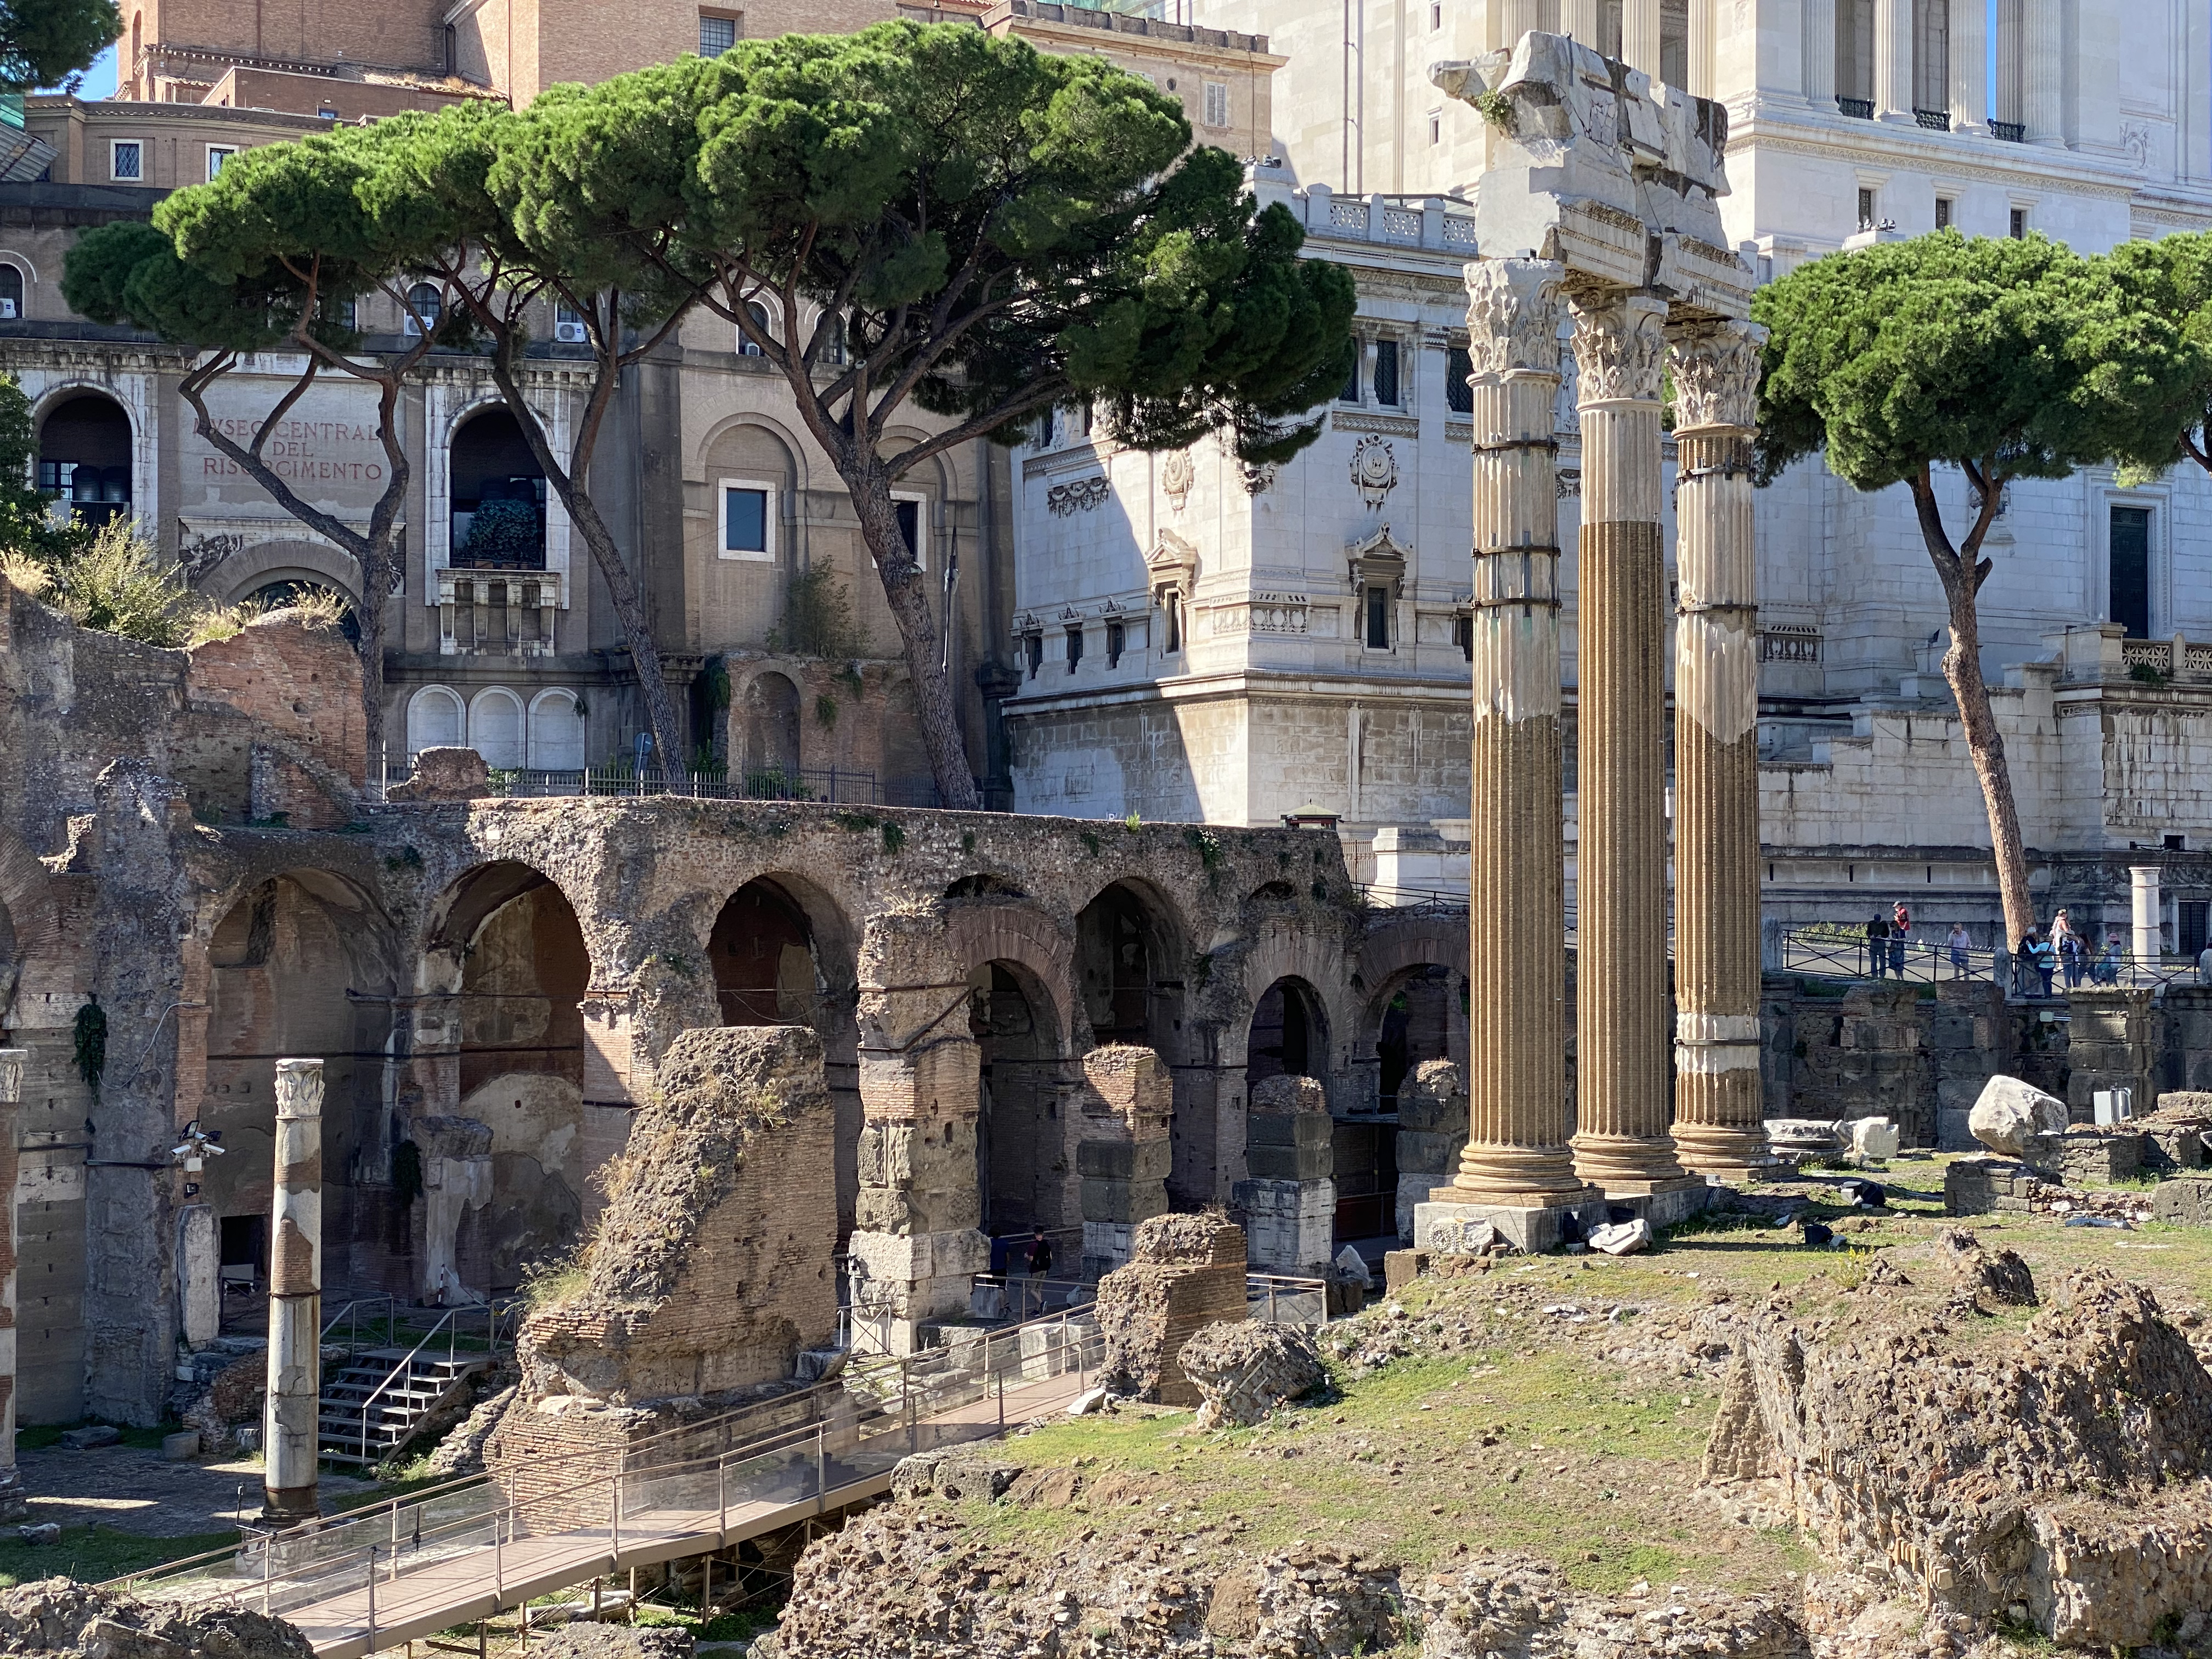 Detail of the Forum of Caesar, telephoto camera.